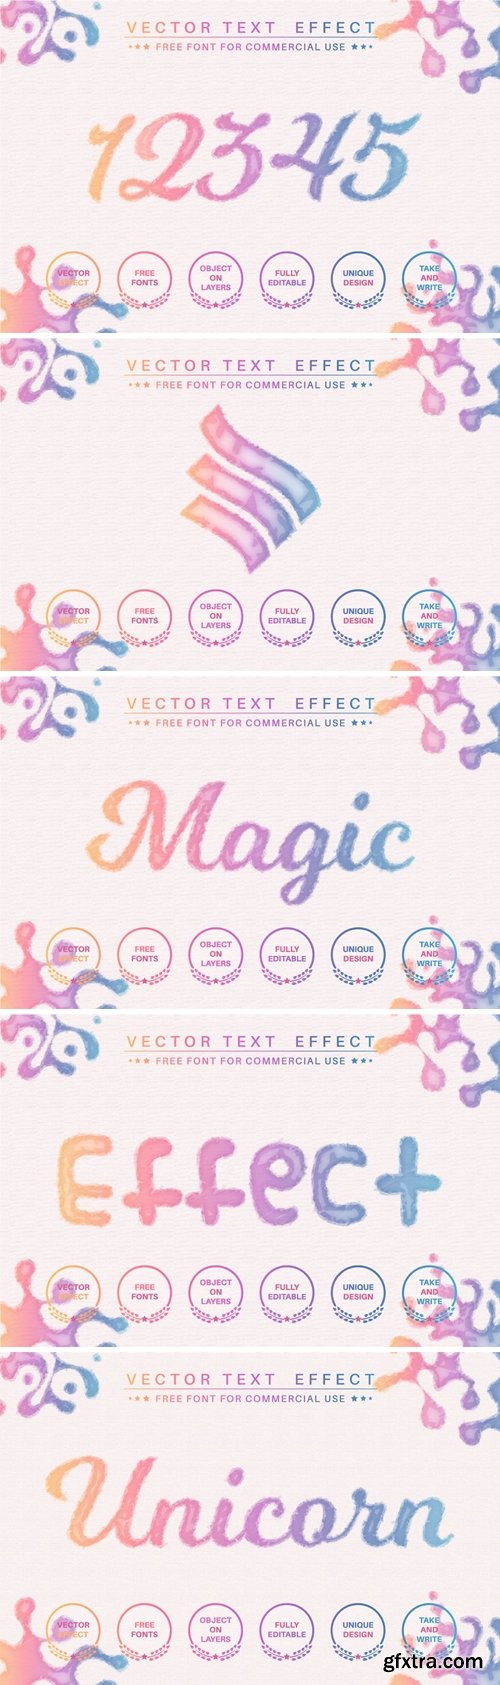 Watercolor unicorn - editable text effect